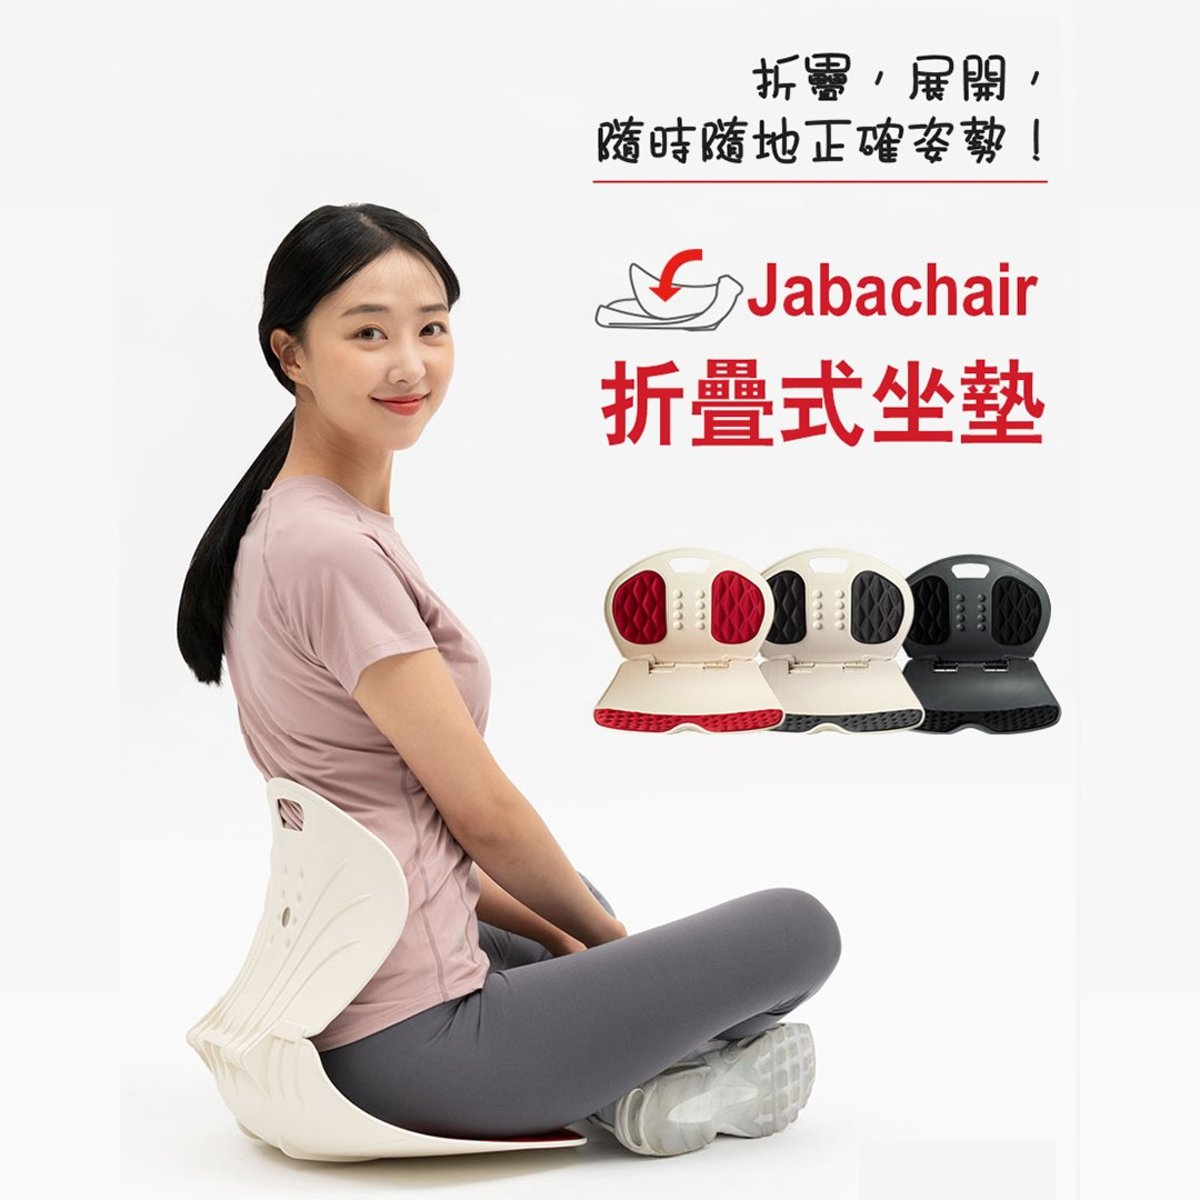 Jaba - 韓國製造 Jabachair 折疊式護脊坐墊